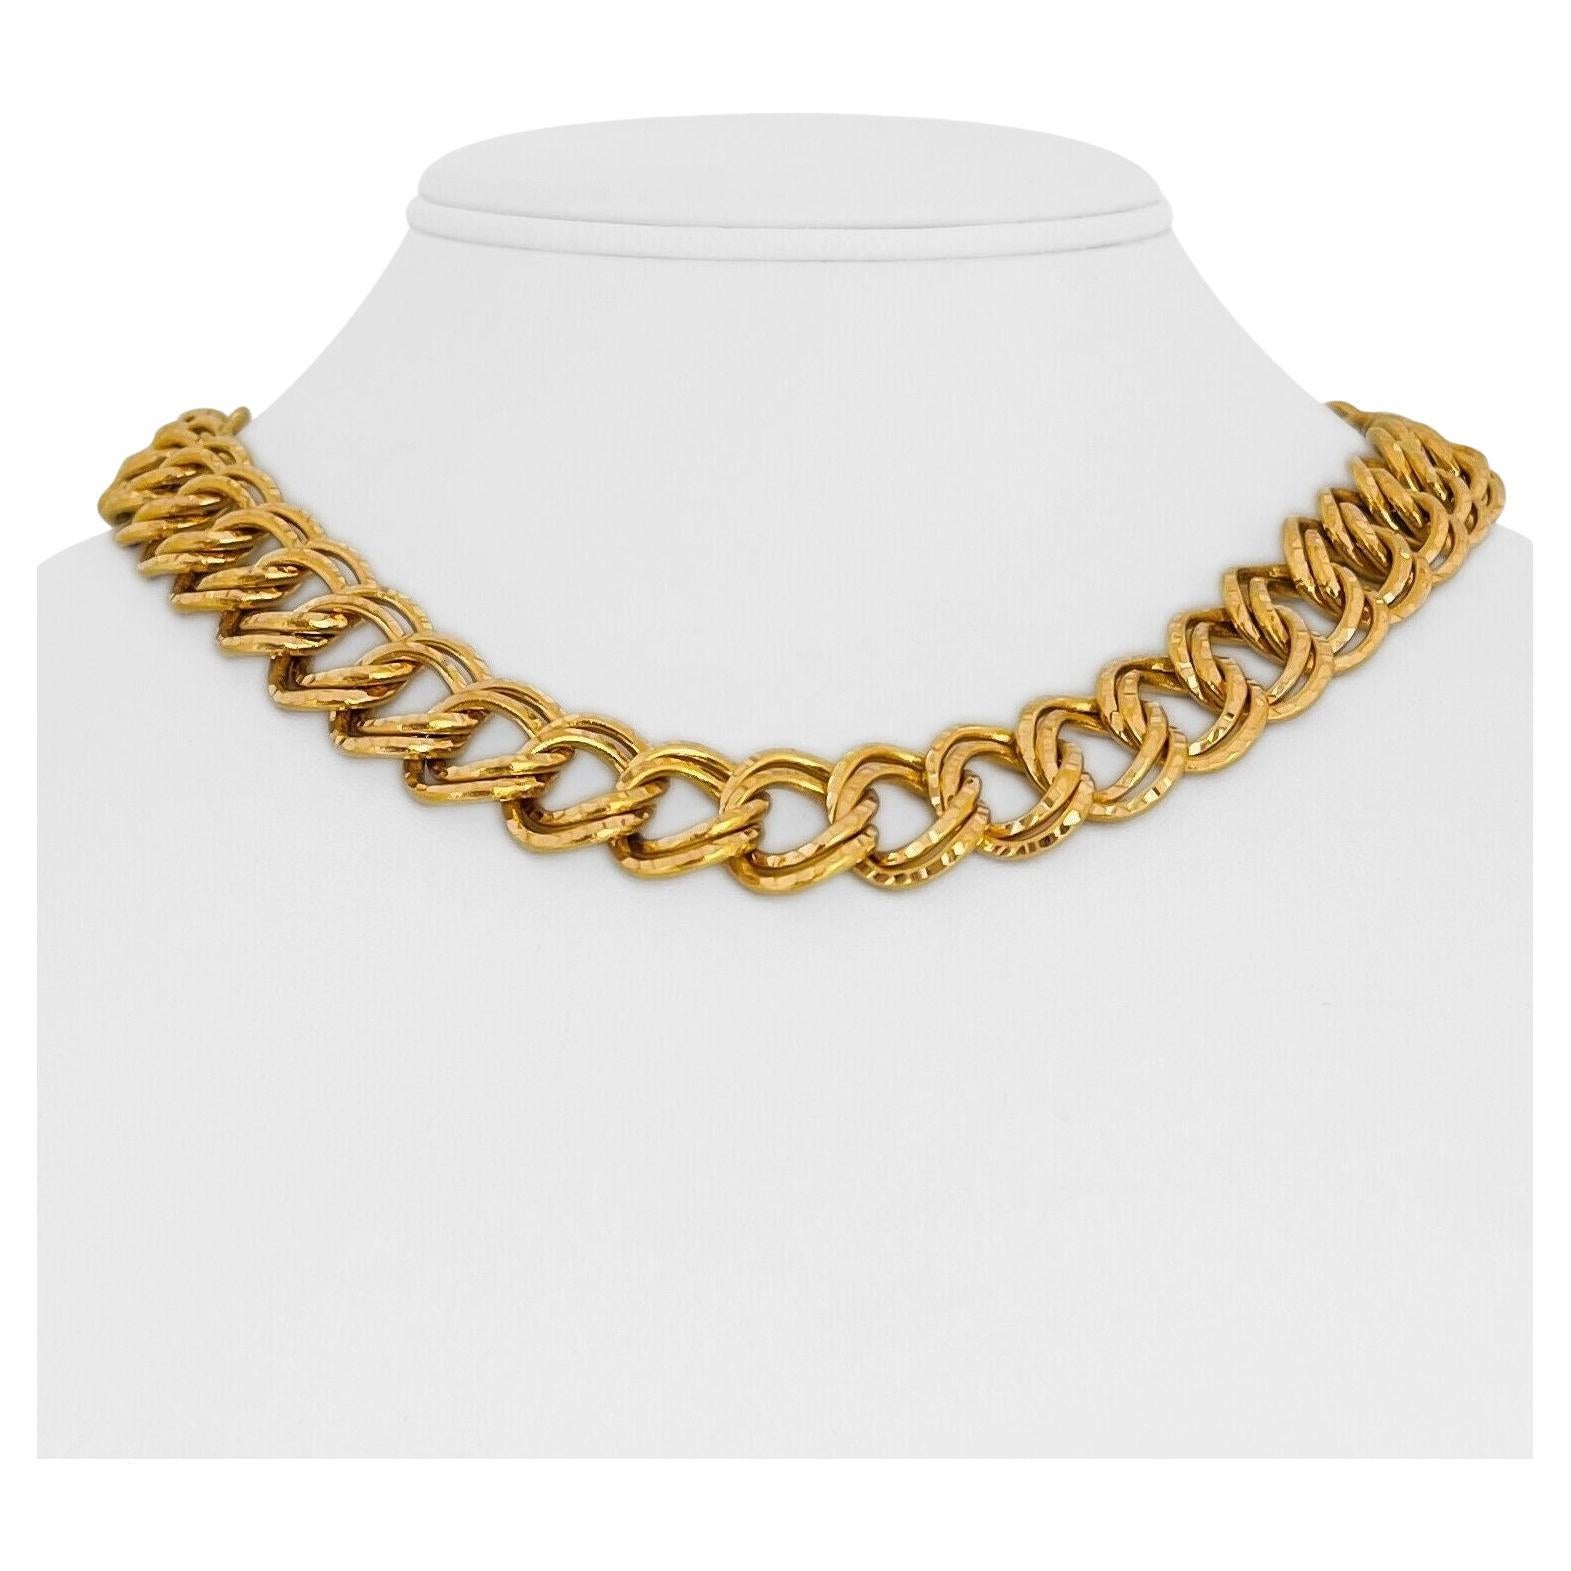 22 Karat Yellow Gold Heavy Diamond Cut Double Circle Curb Link Necklace